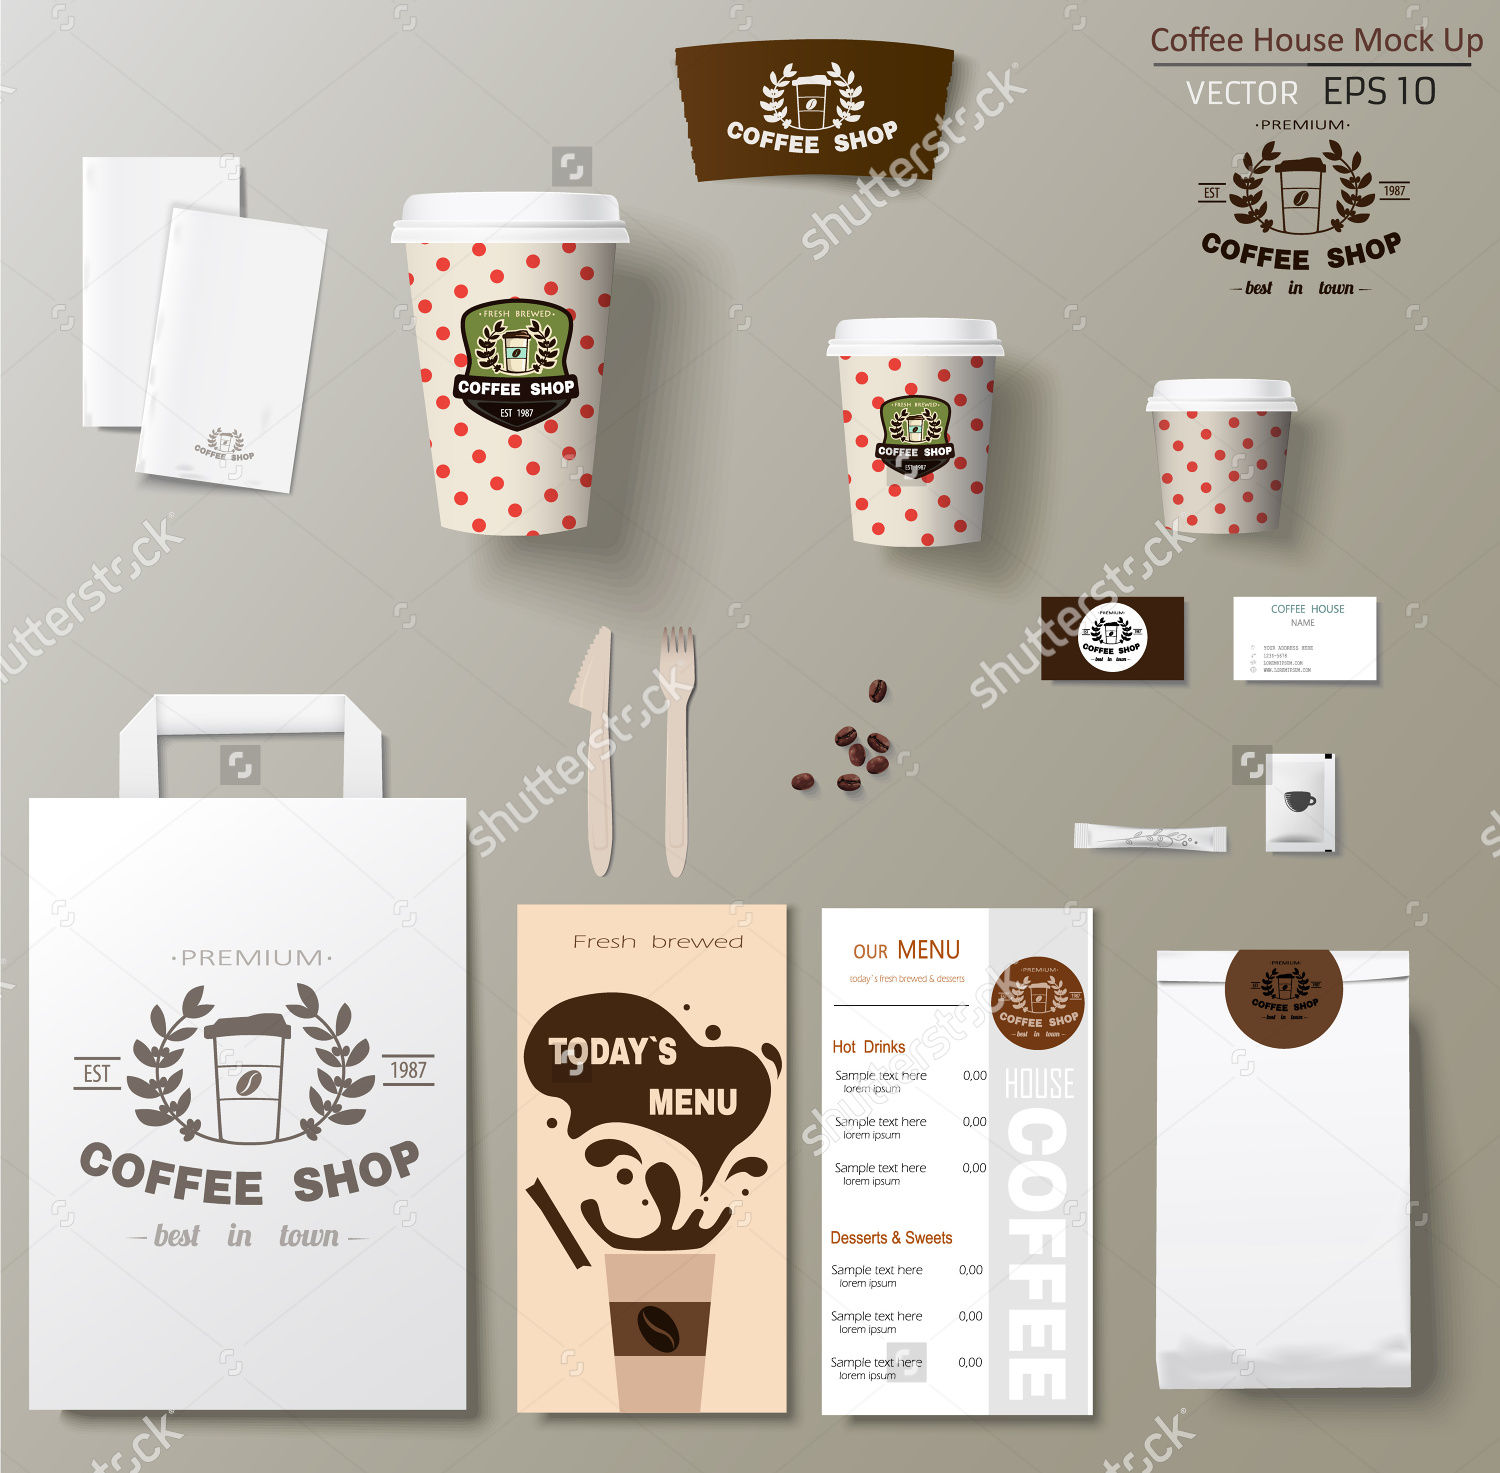 9+ Coffee Branding Mockup Designs - PSD, AI Download | Design Trends - Premium PSD, Vector Downloads